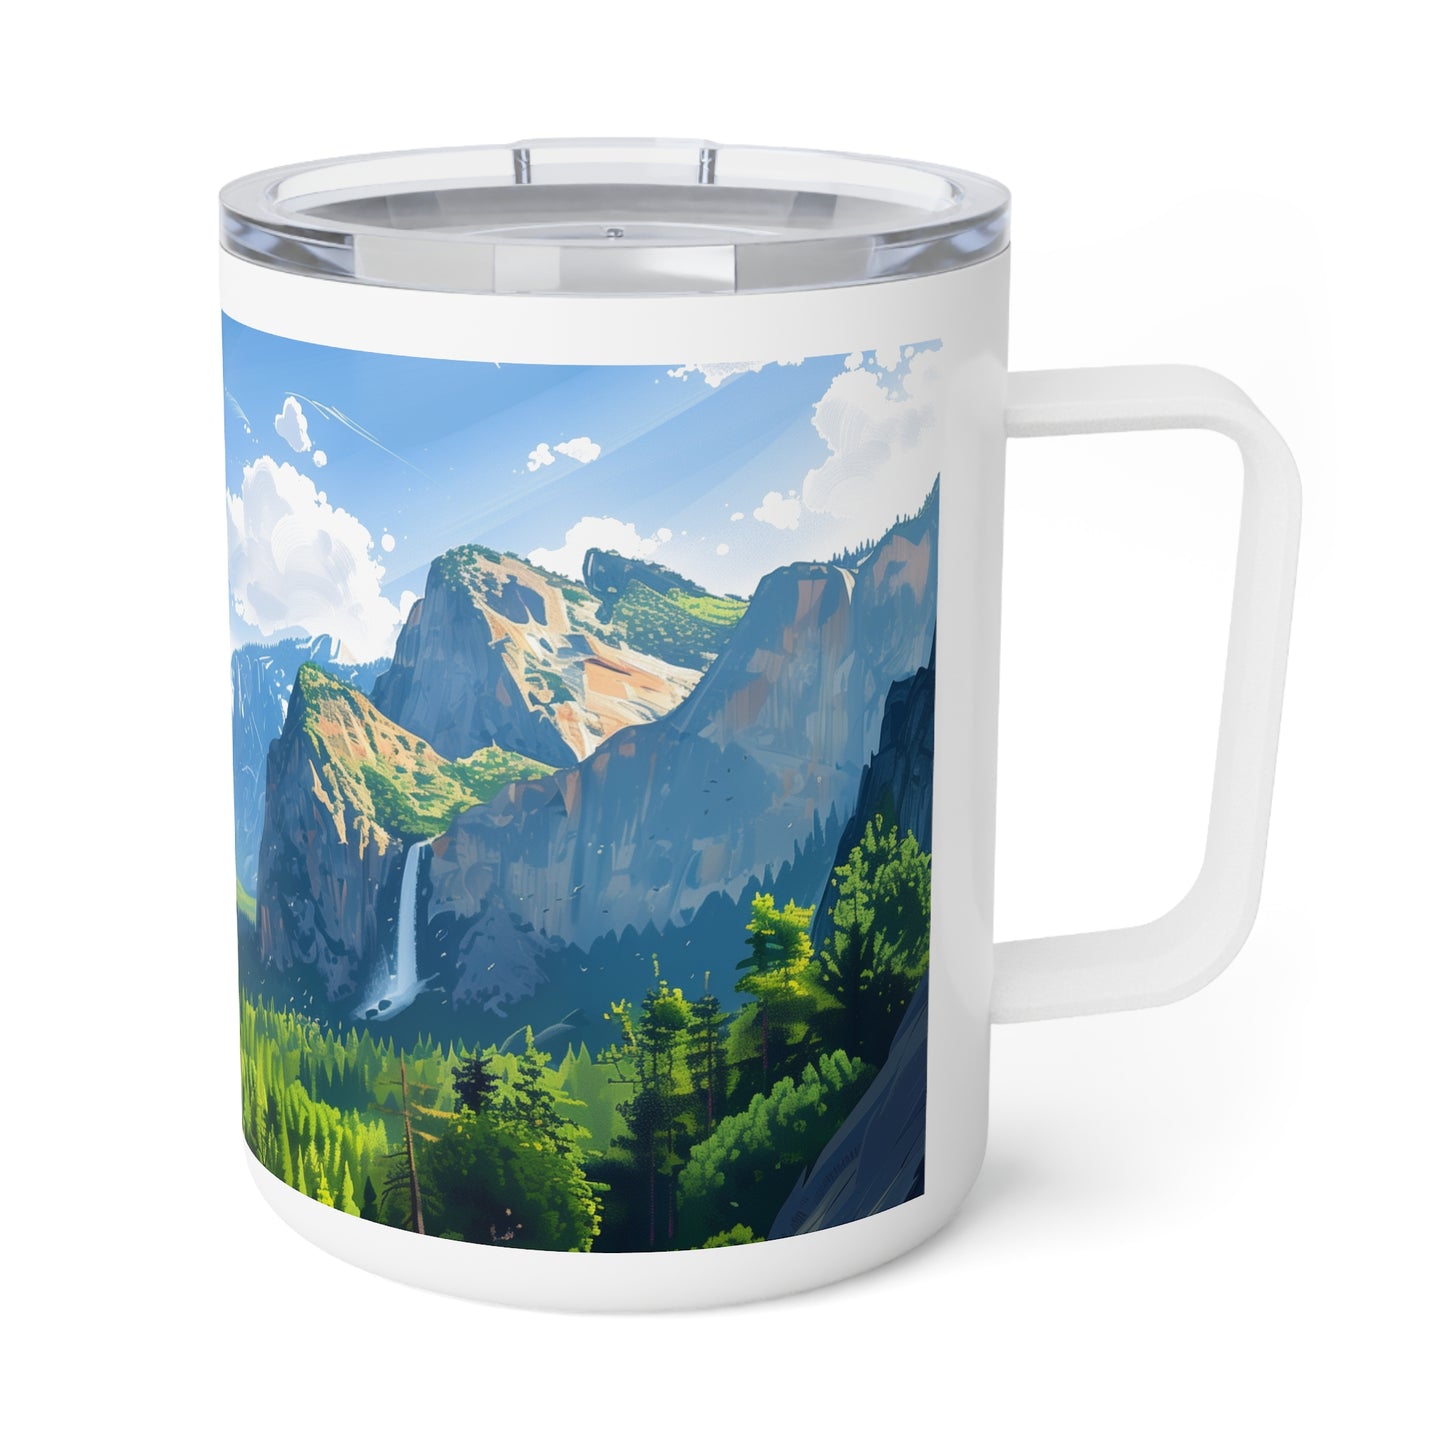 Insulated Coffee Mug with Yosemite National Park Design, 10 oz